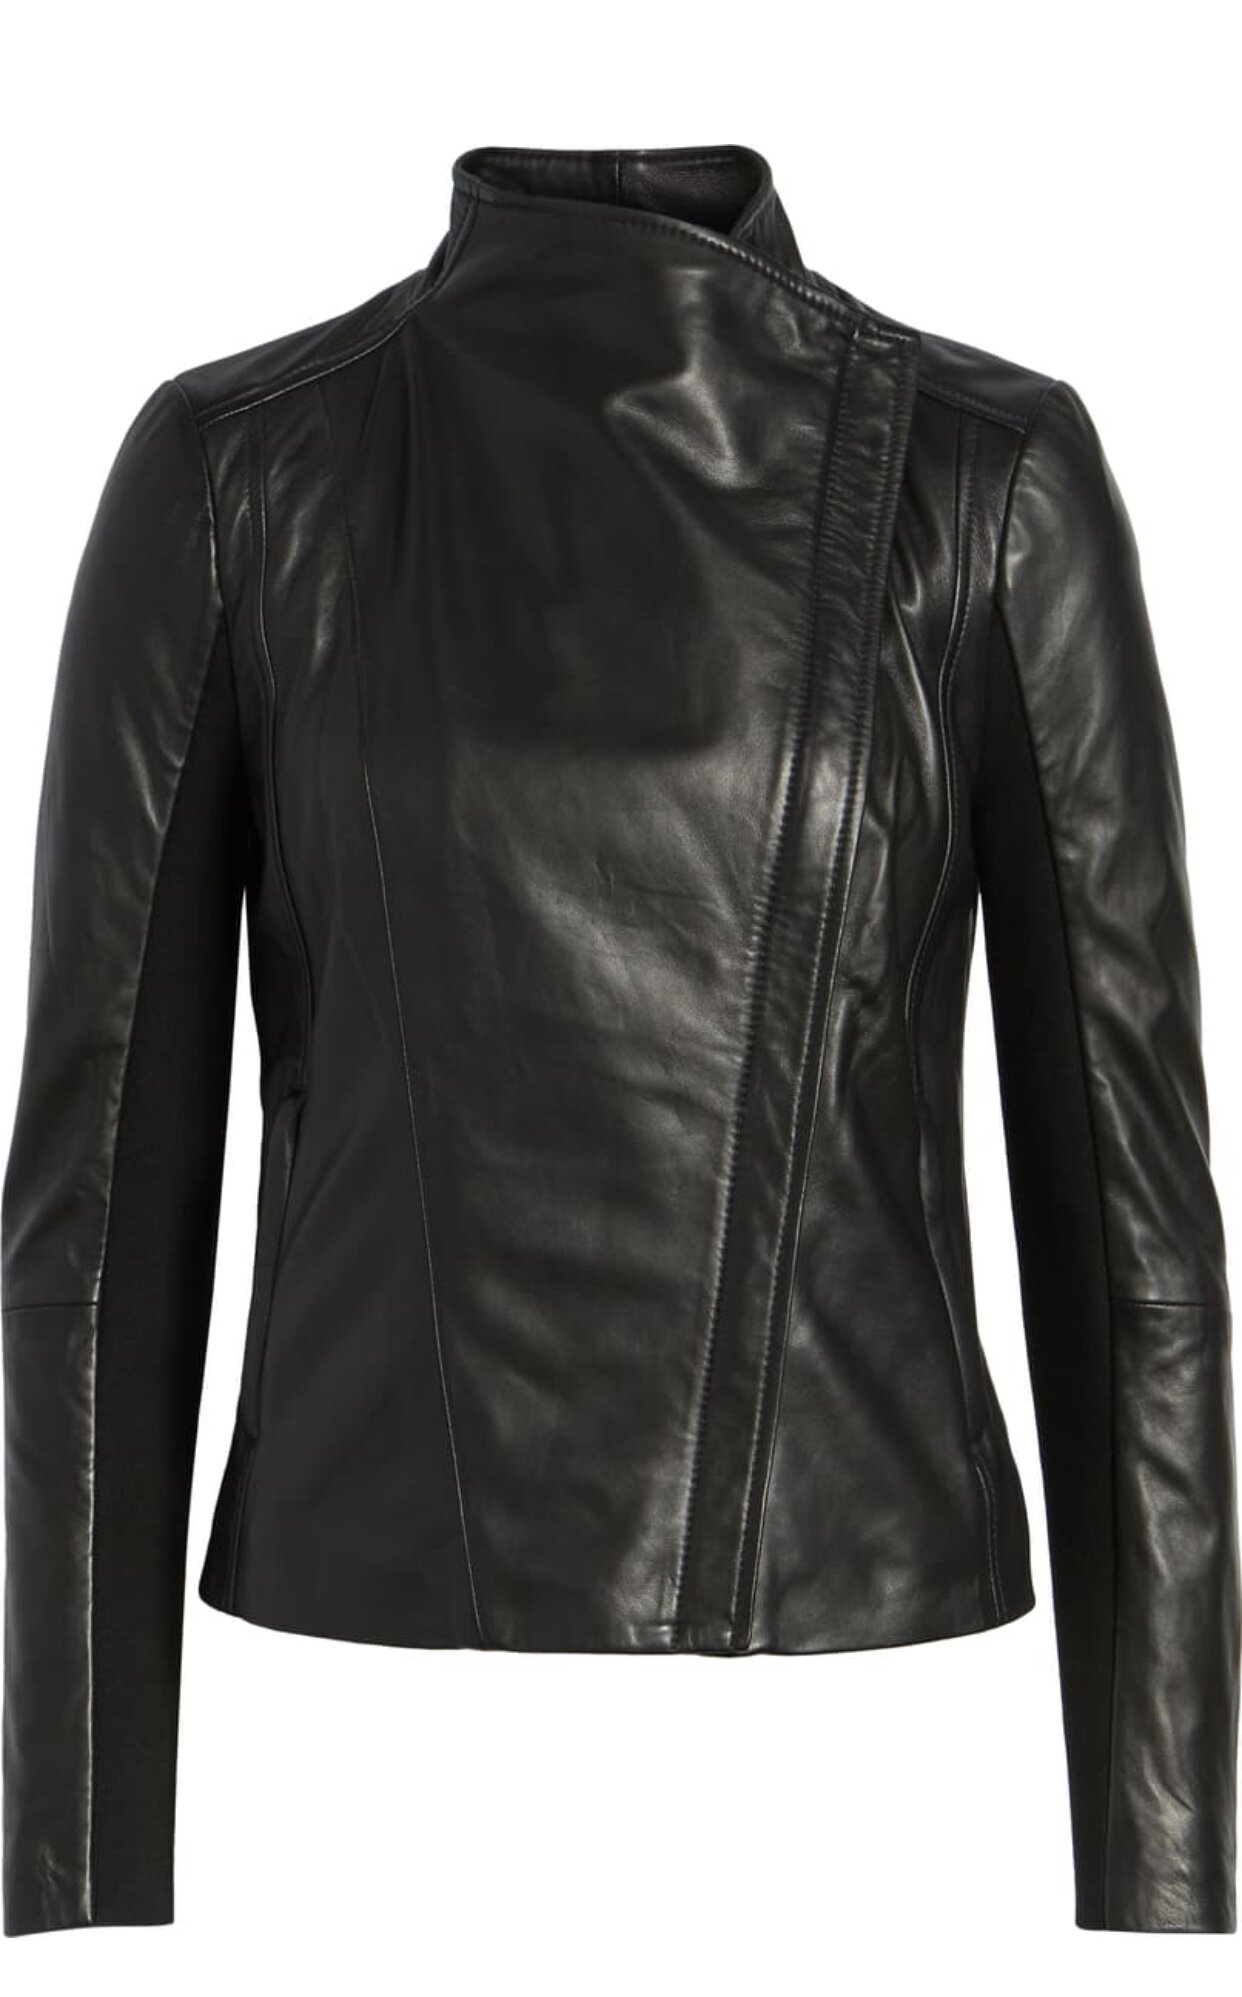 Chelsea28 Leather Jacket